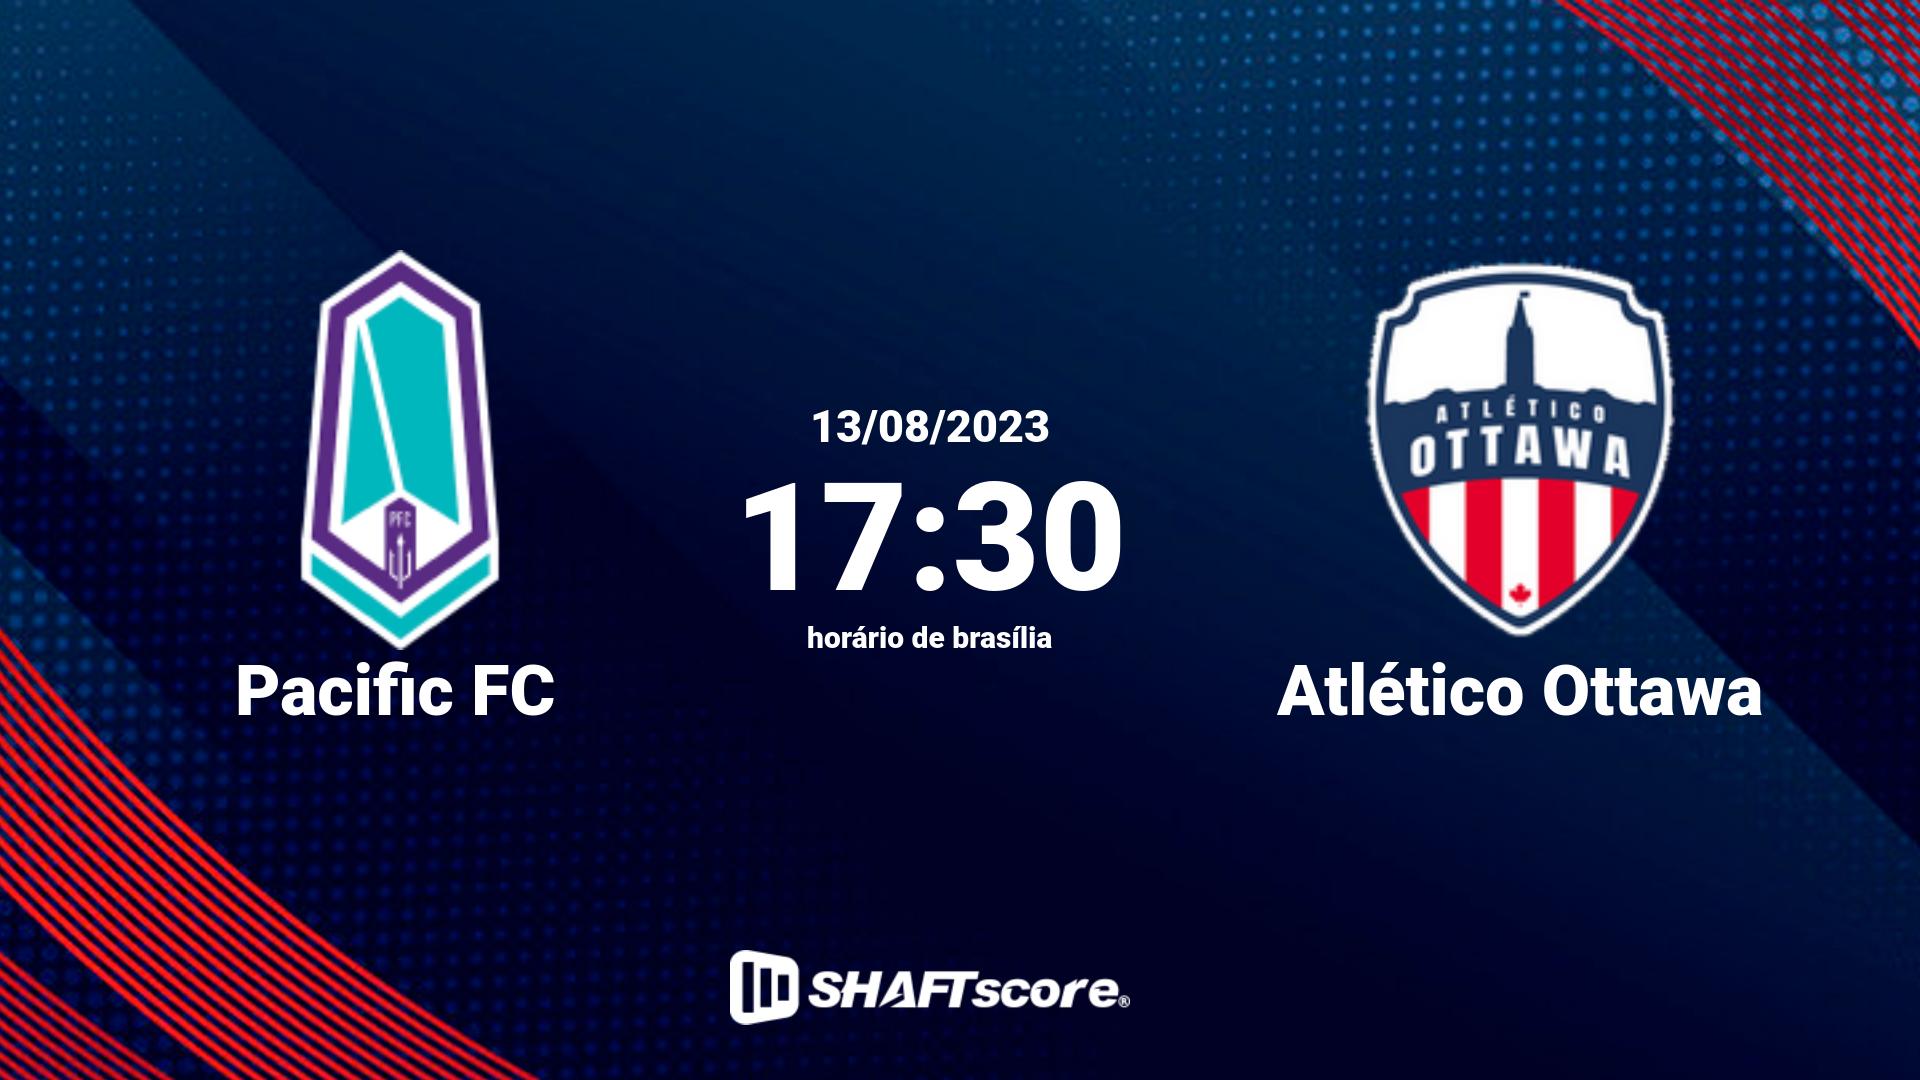 Estatísticas do jogo Pacific FC vs Atlético Ottawa 13.08 17:30